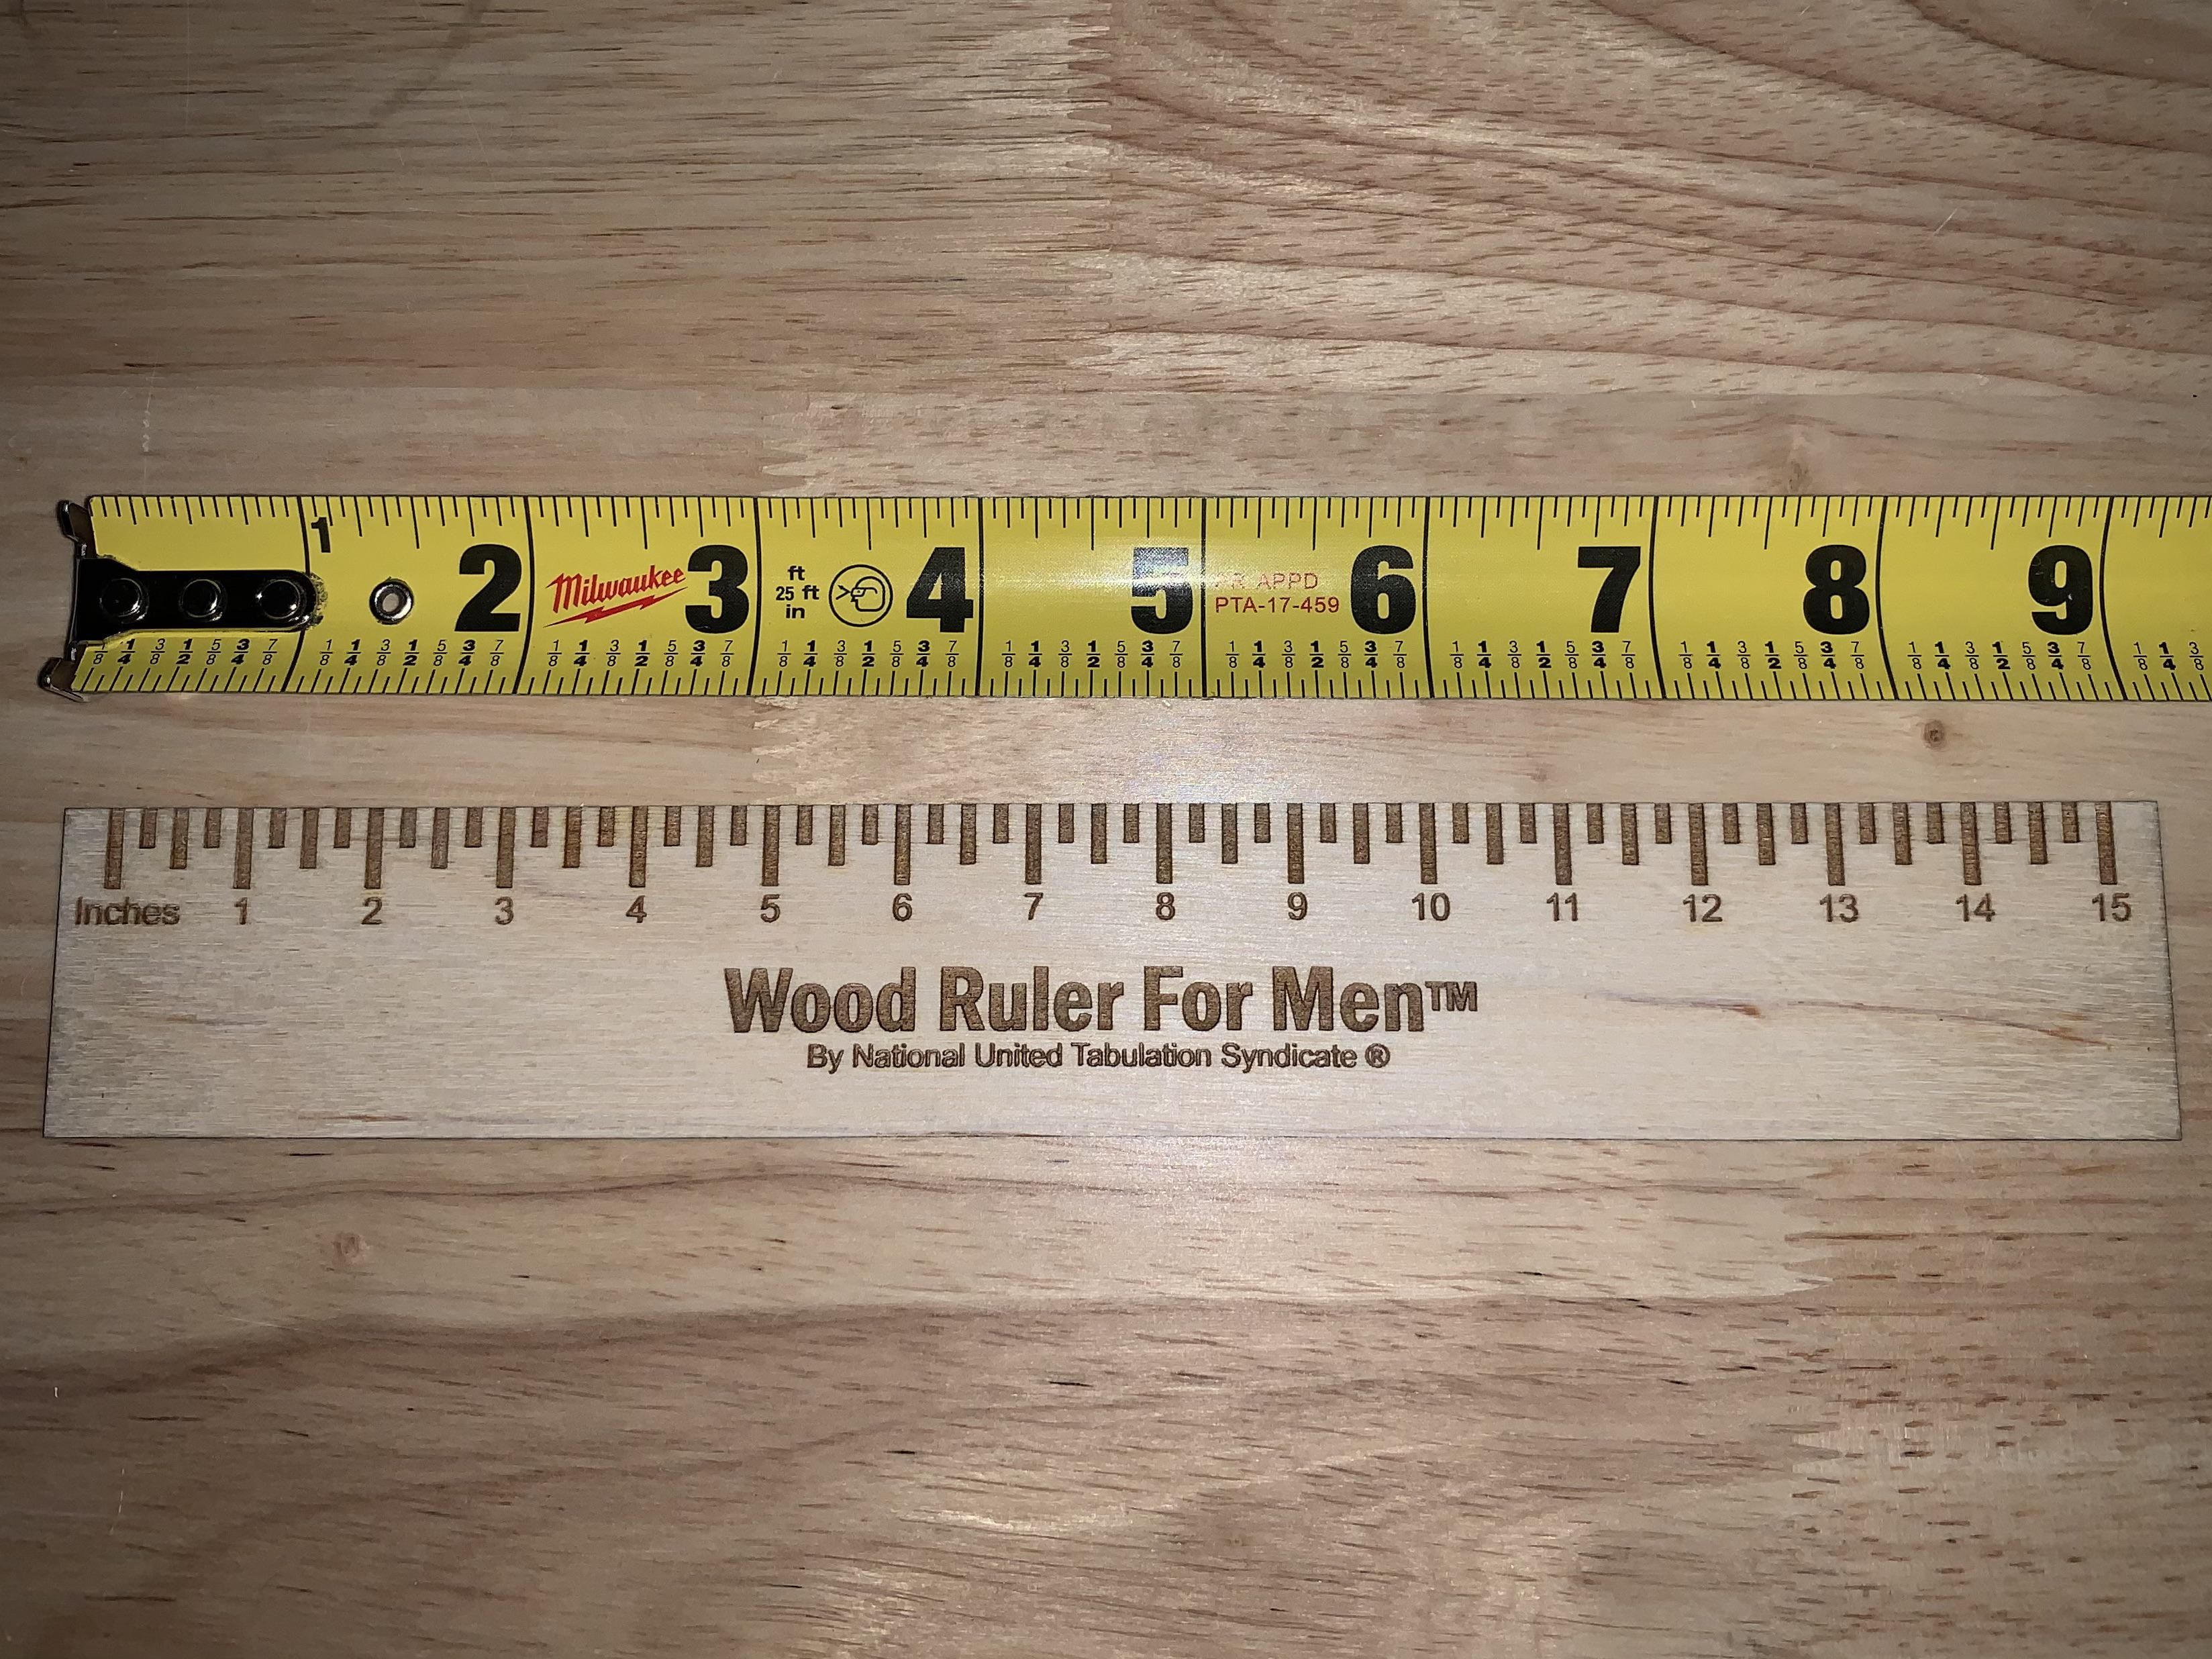 Wood Ruler For Men